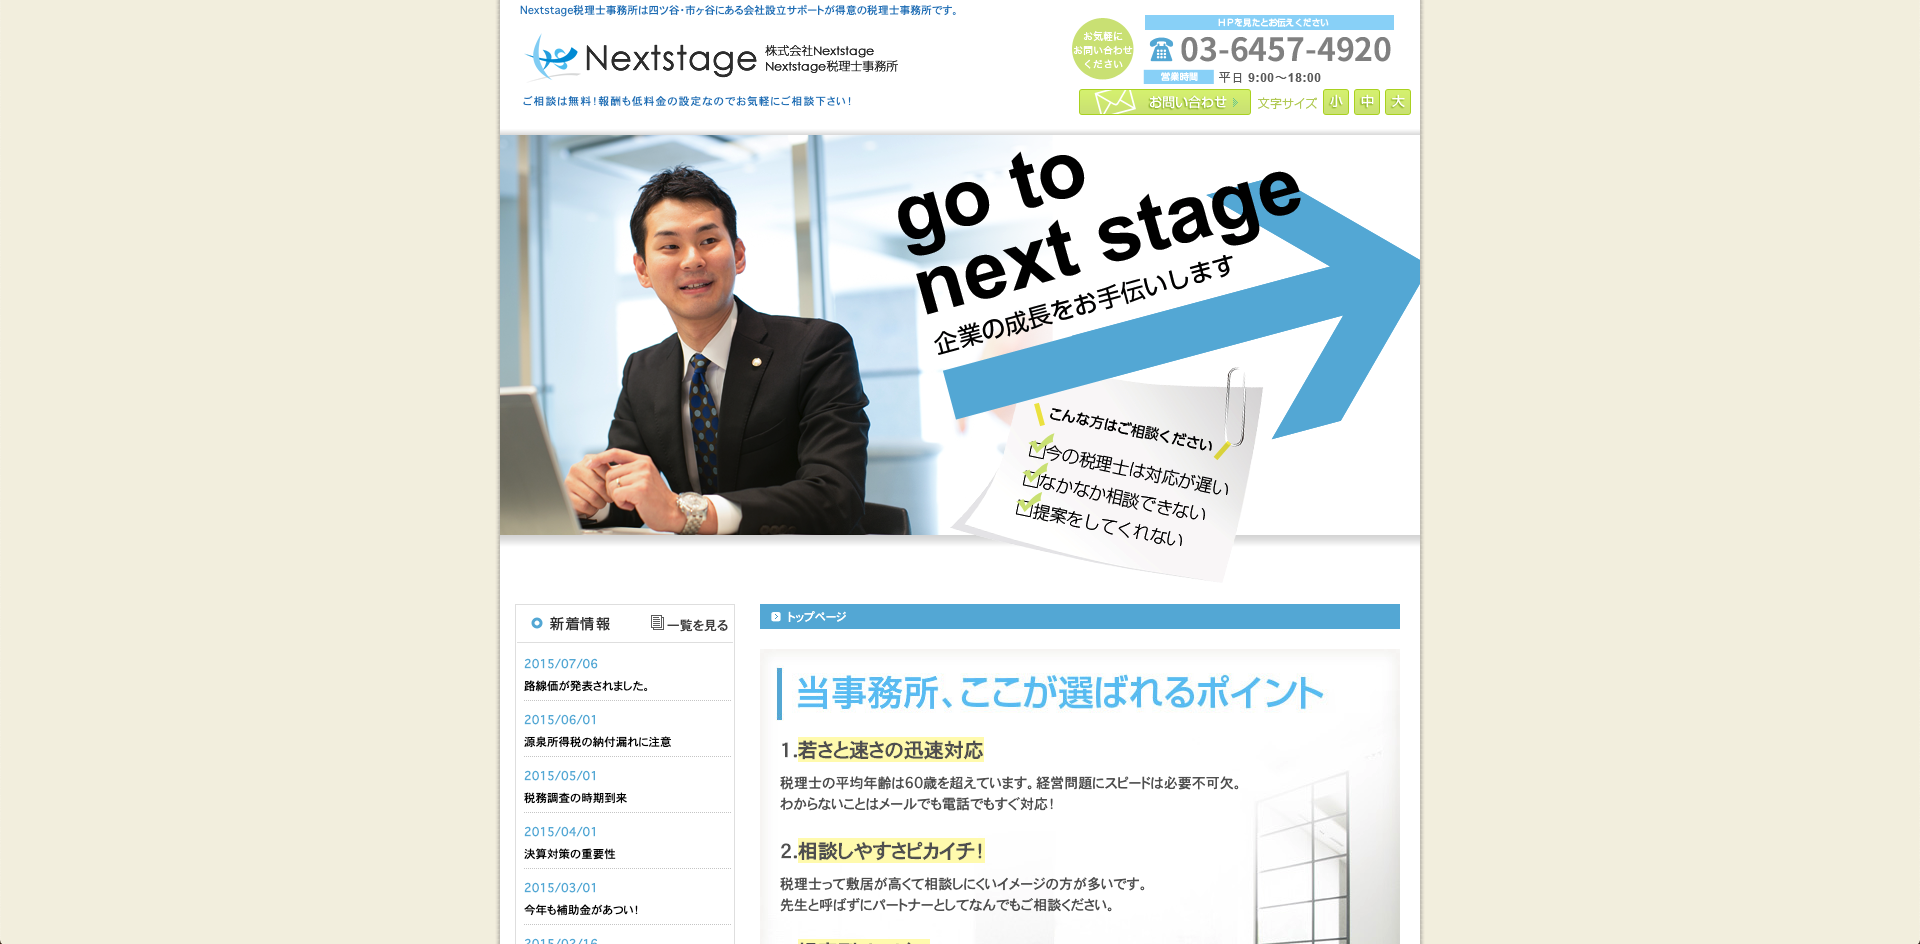 Nextstage税理士事務所のNextstage税理士事務所サービス